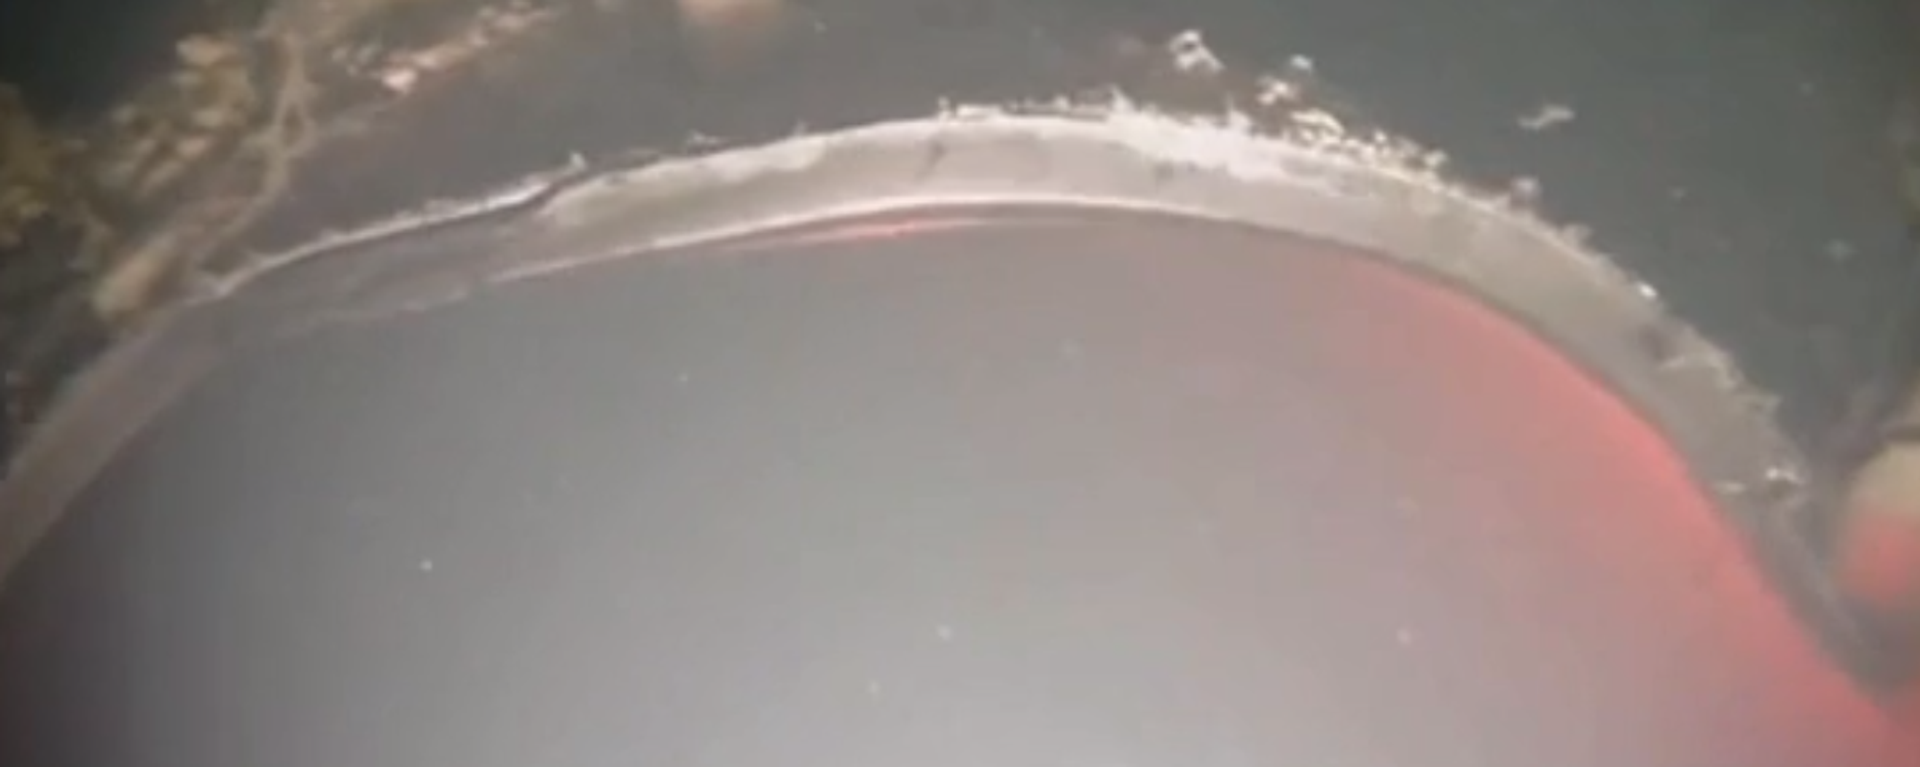 Screengrab of video by Swedish media showing underwater drone footage of damaged Nord Stream pipeline. - Sputnik International, 1920, 17.03.2023